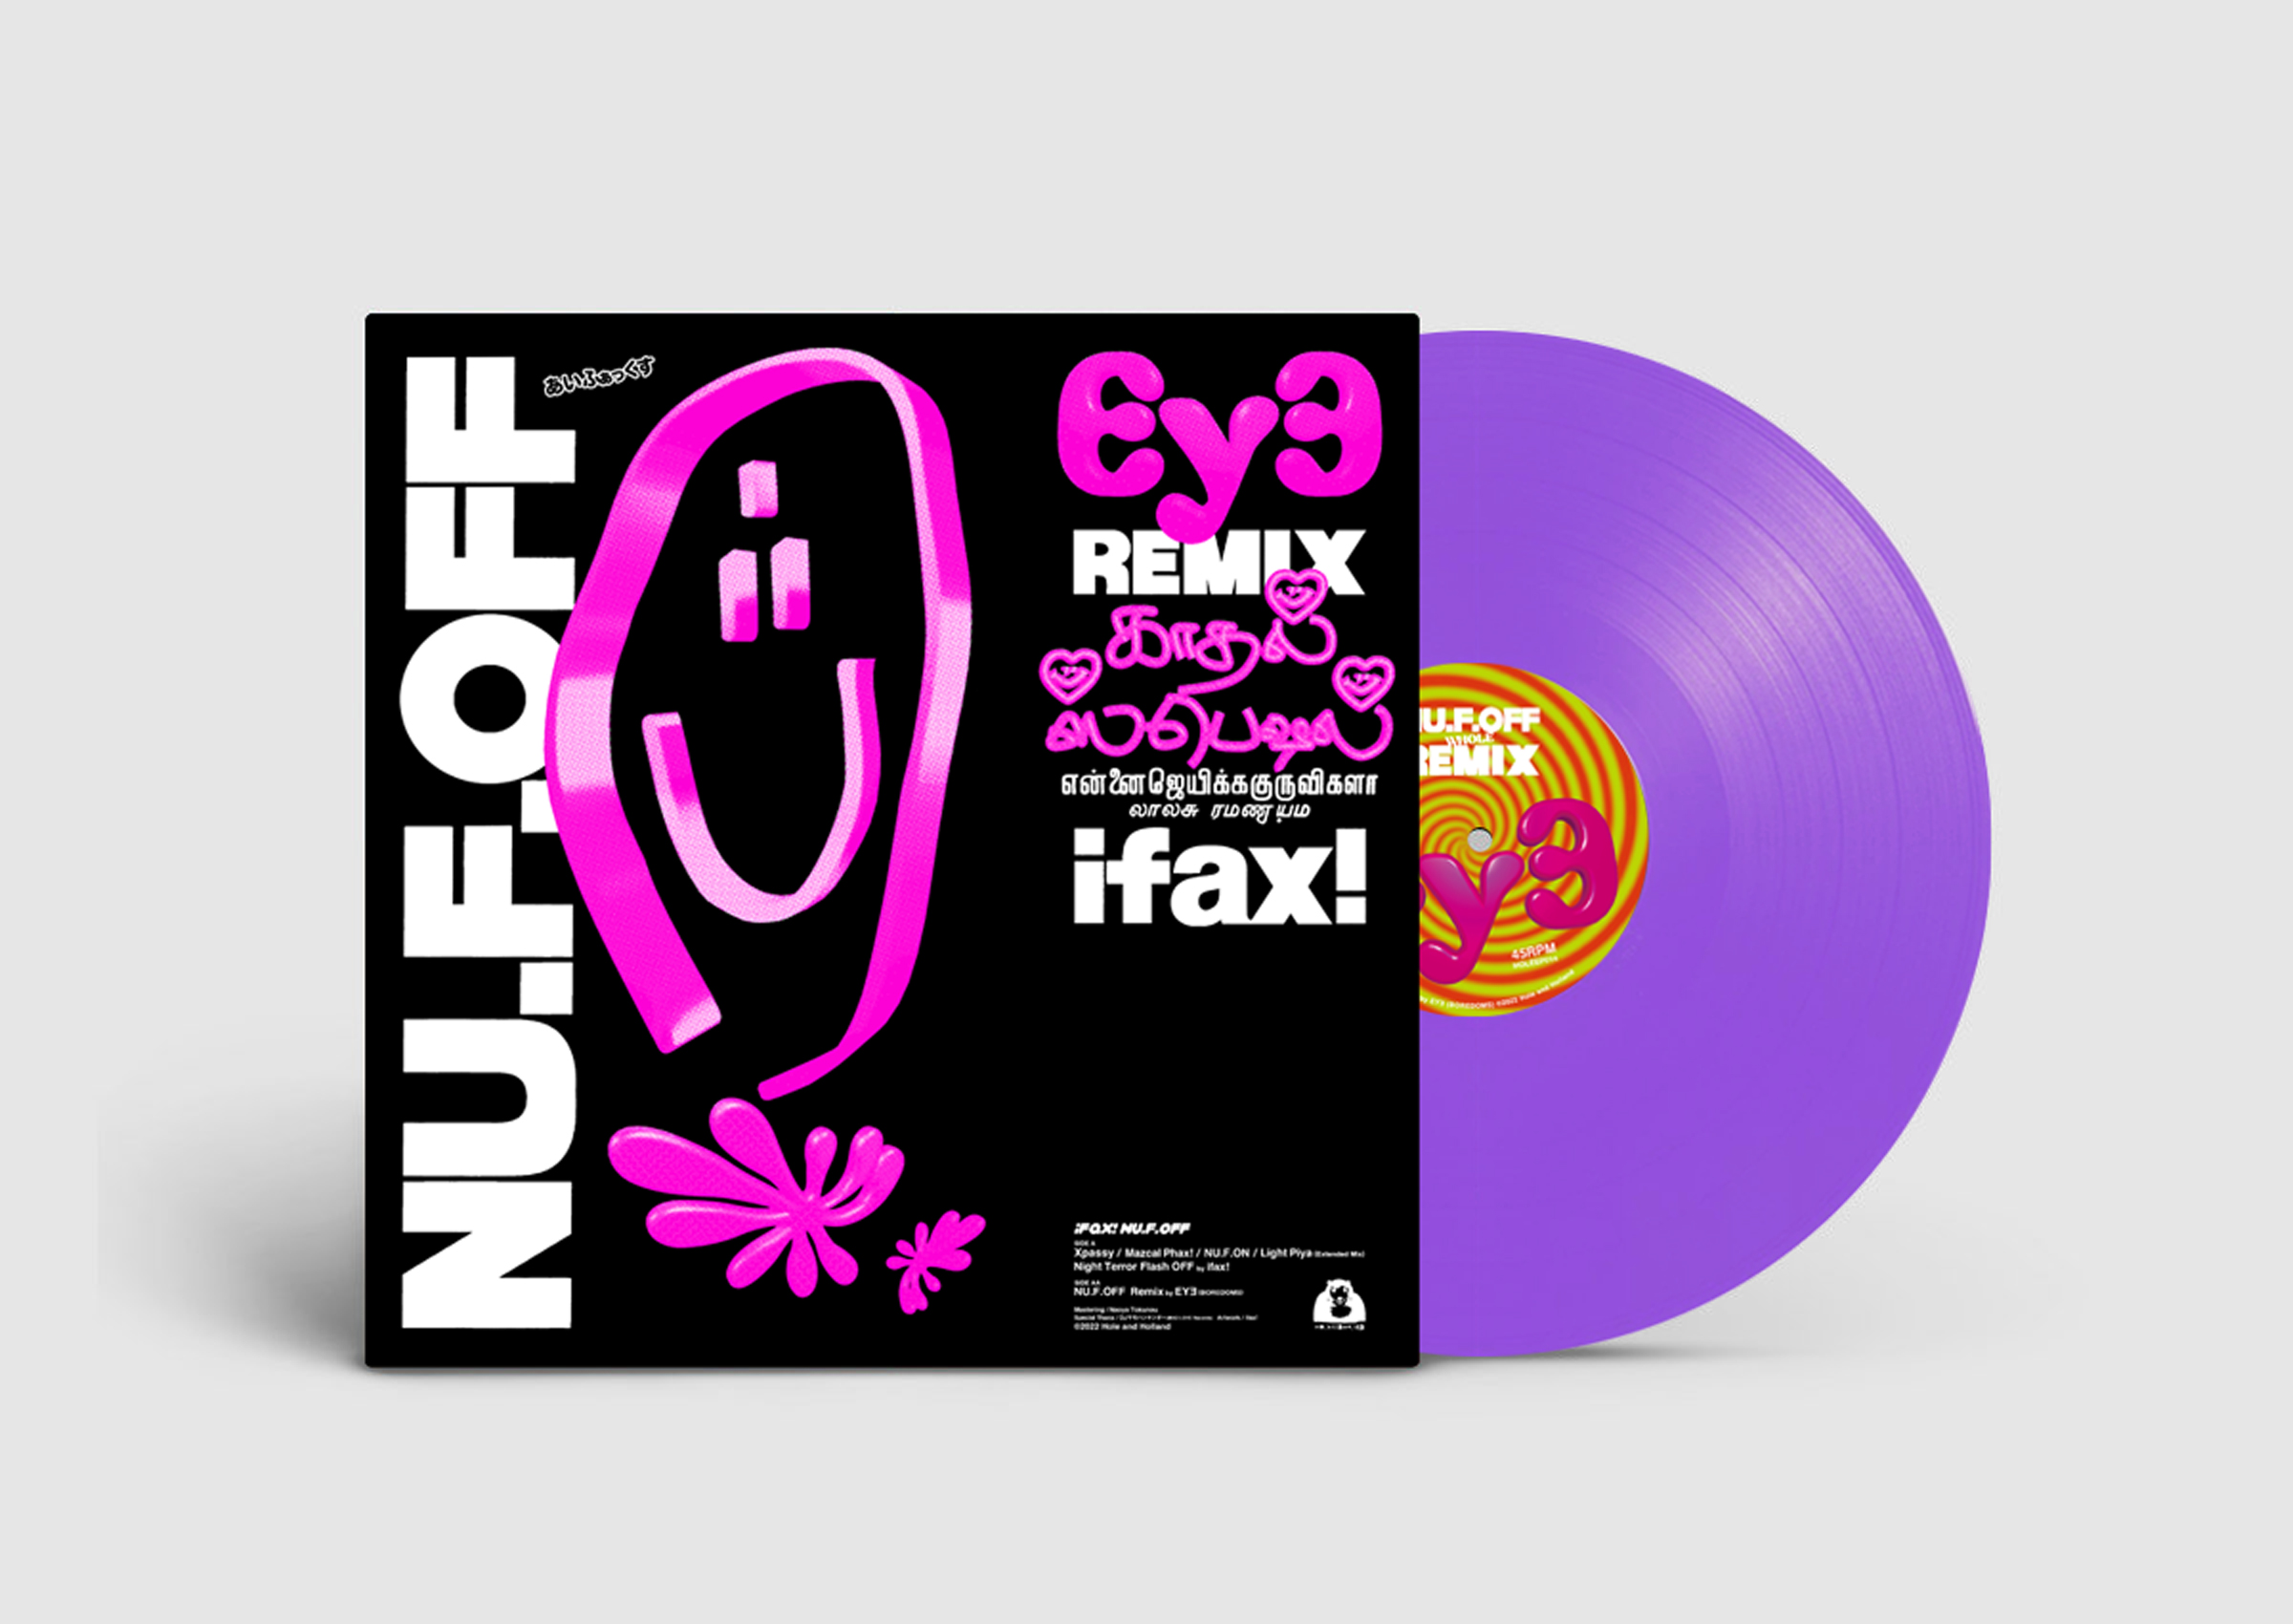 ifax! - NU.F.OFF (Incl, EYヨ Remix) : 12inch+DL